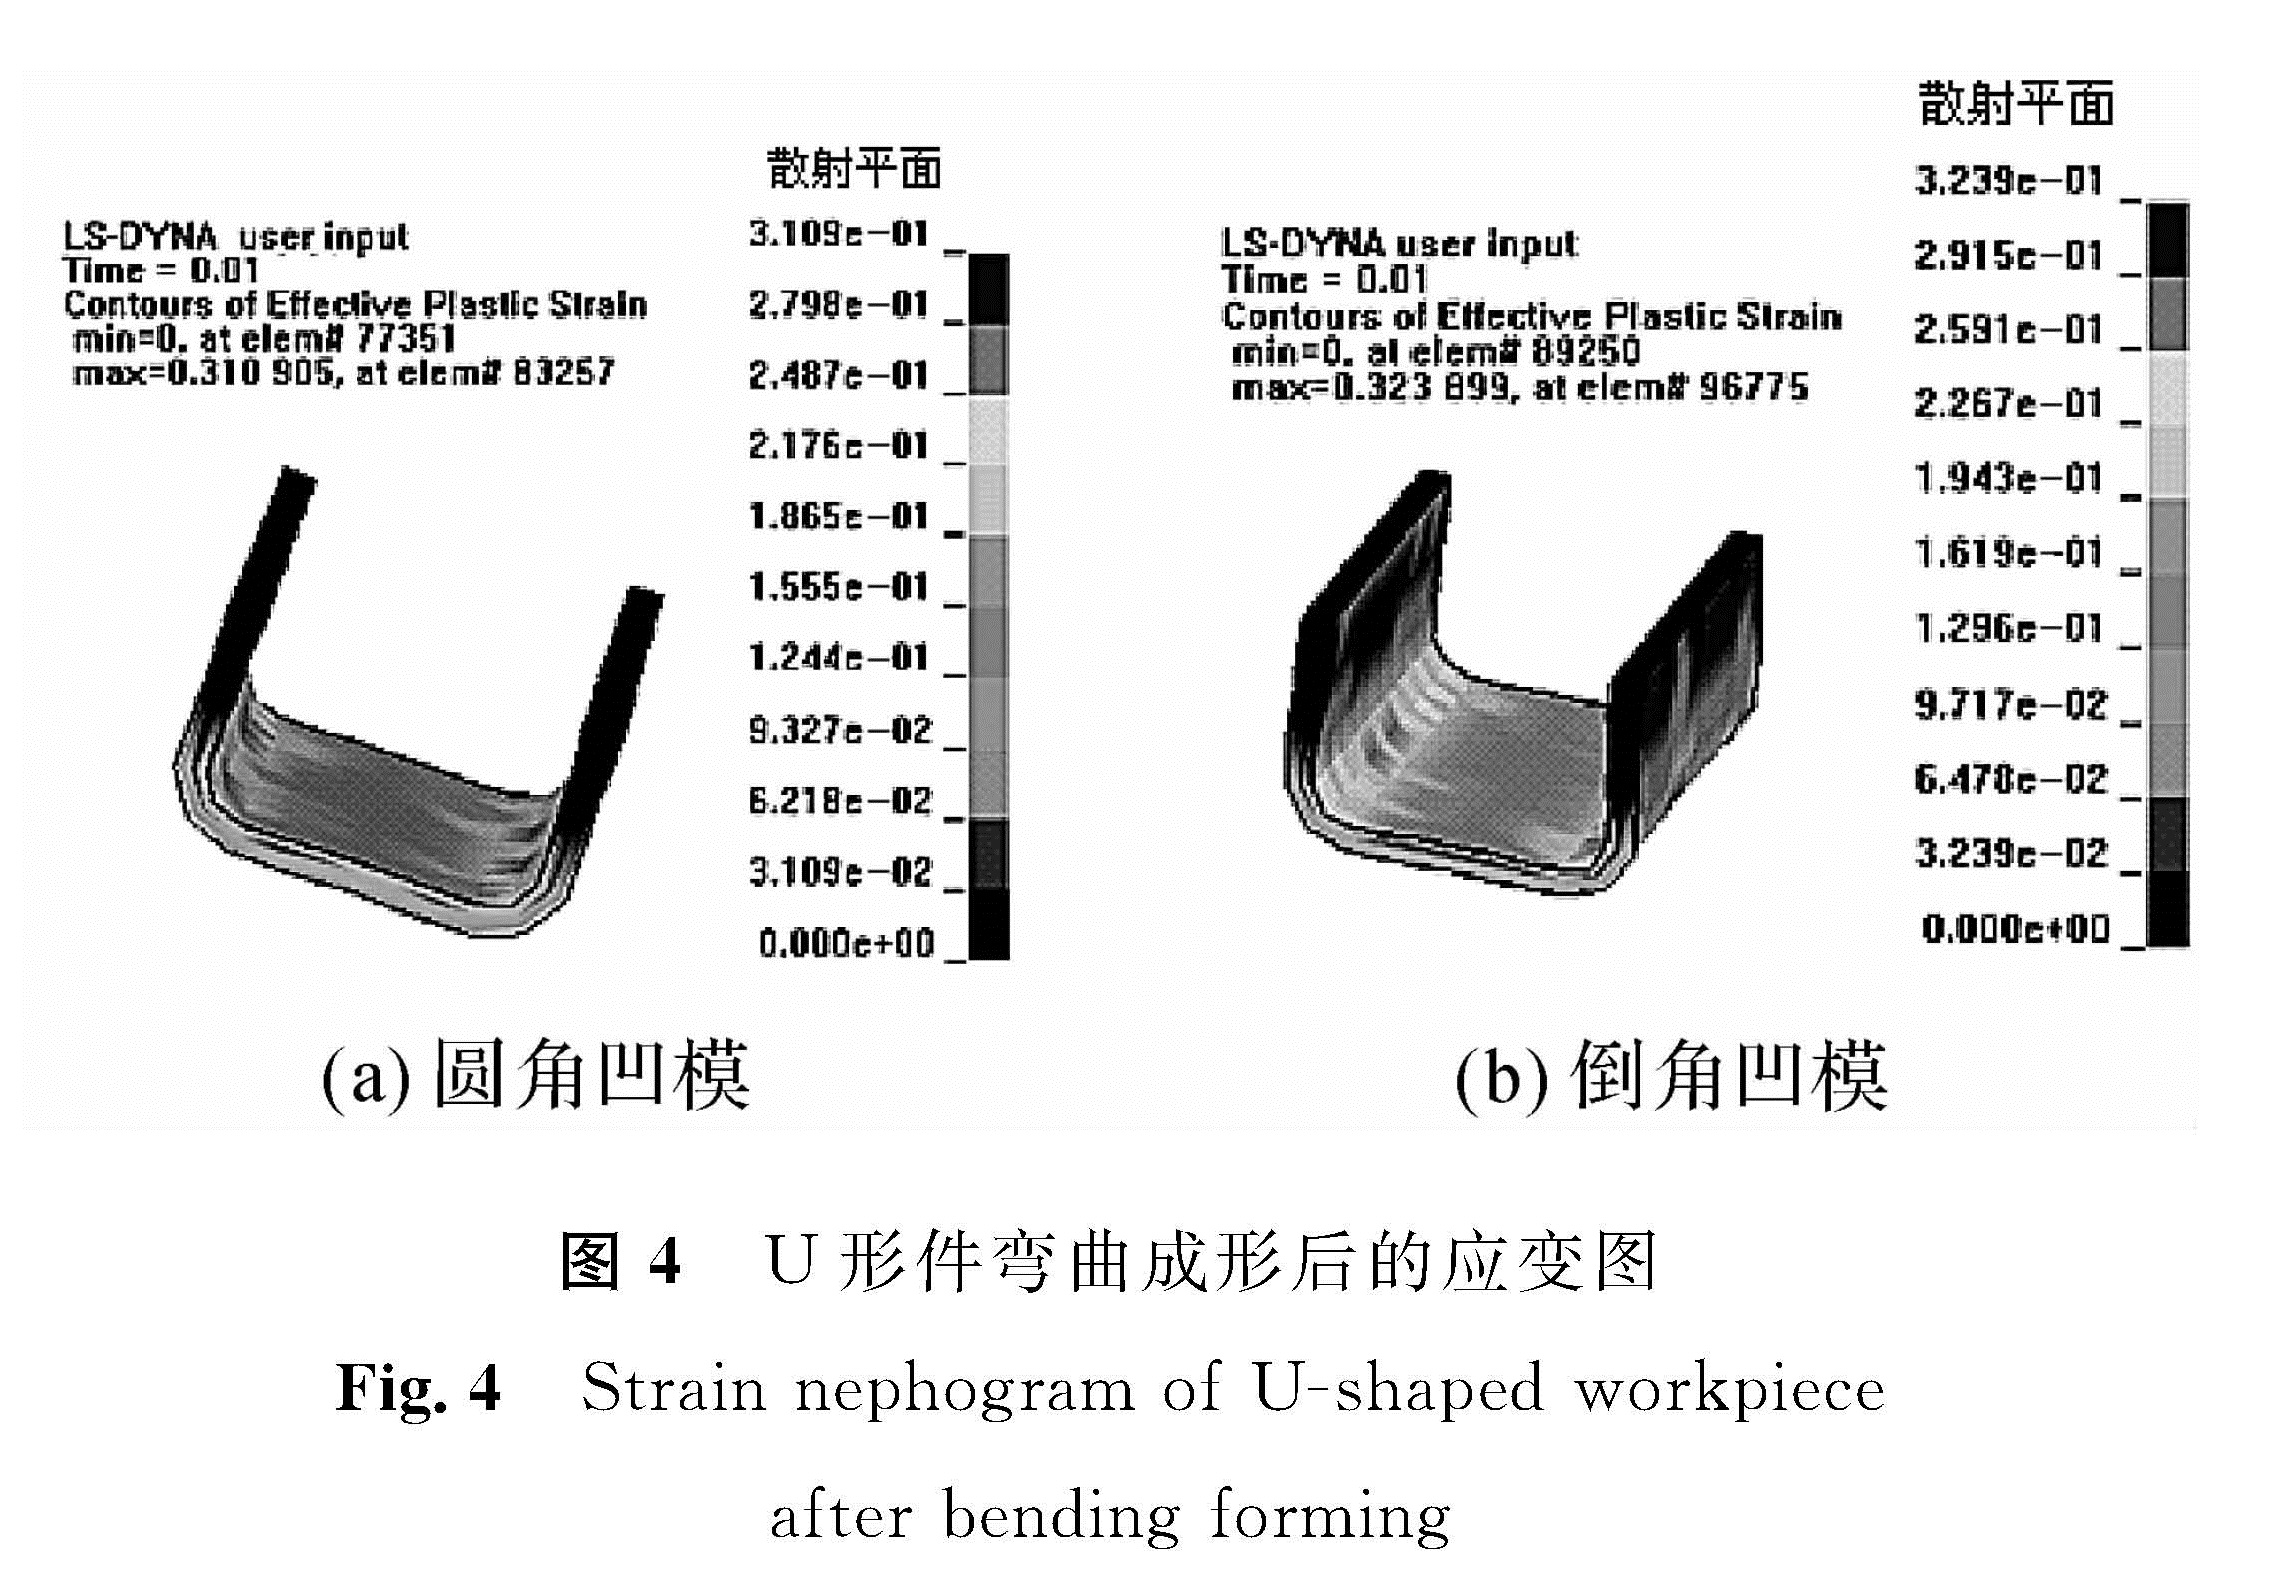 图4 U形件弯曲成形后的应变图<br/>Fig.4 Strain nephogram of U-shaped workpiece after bending forming 